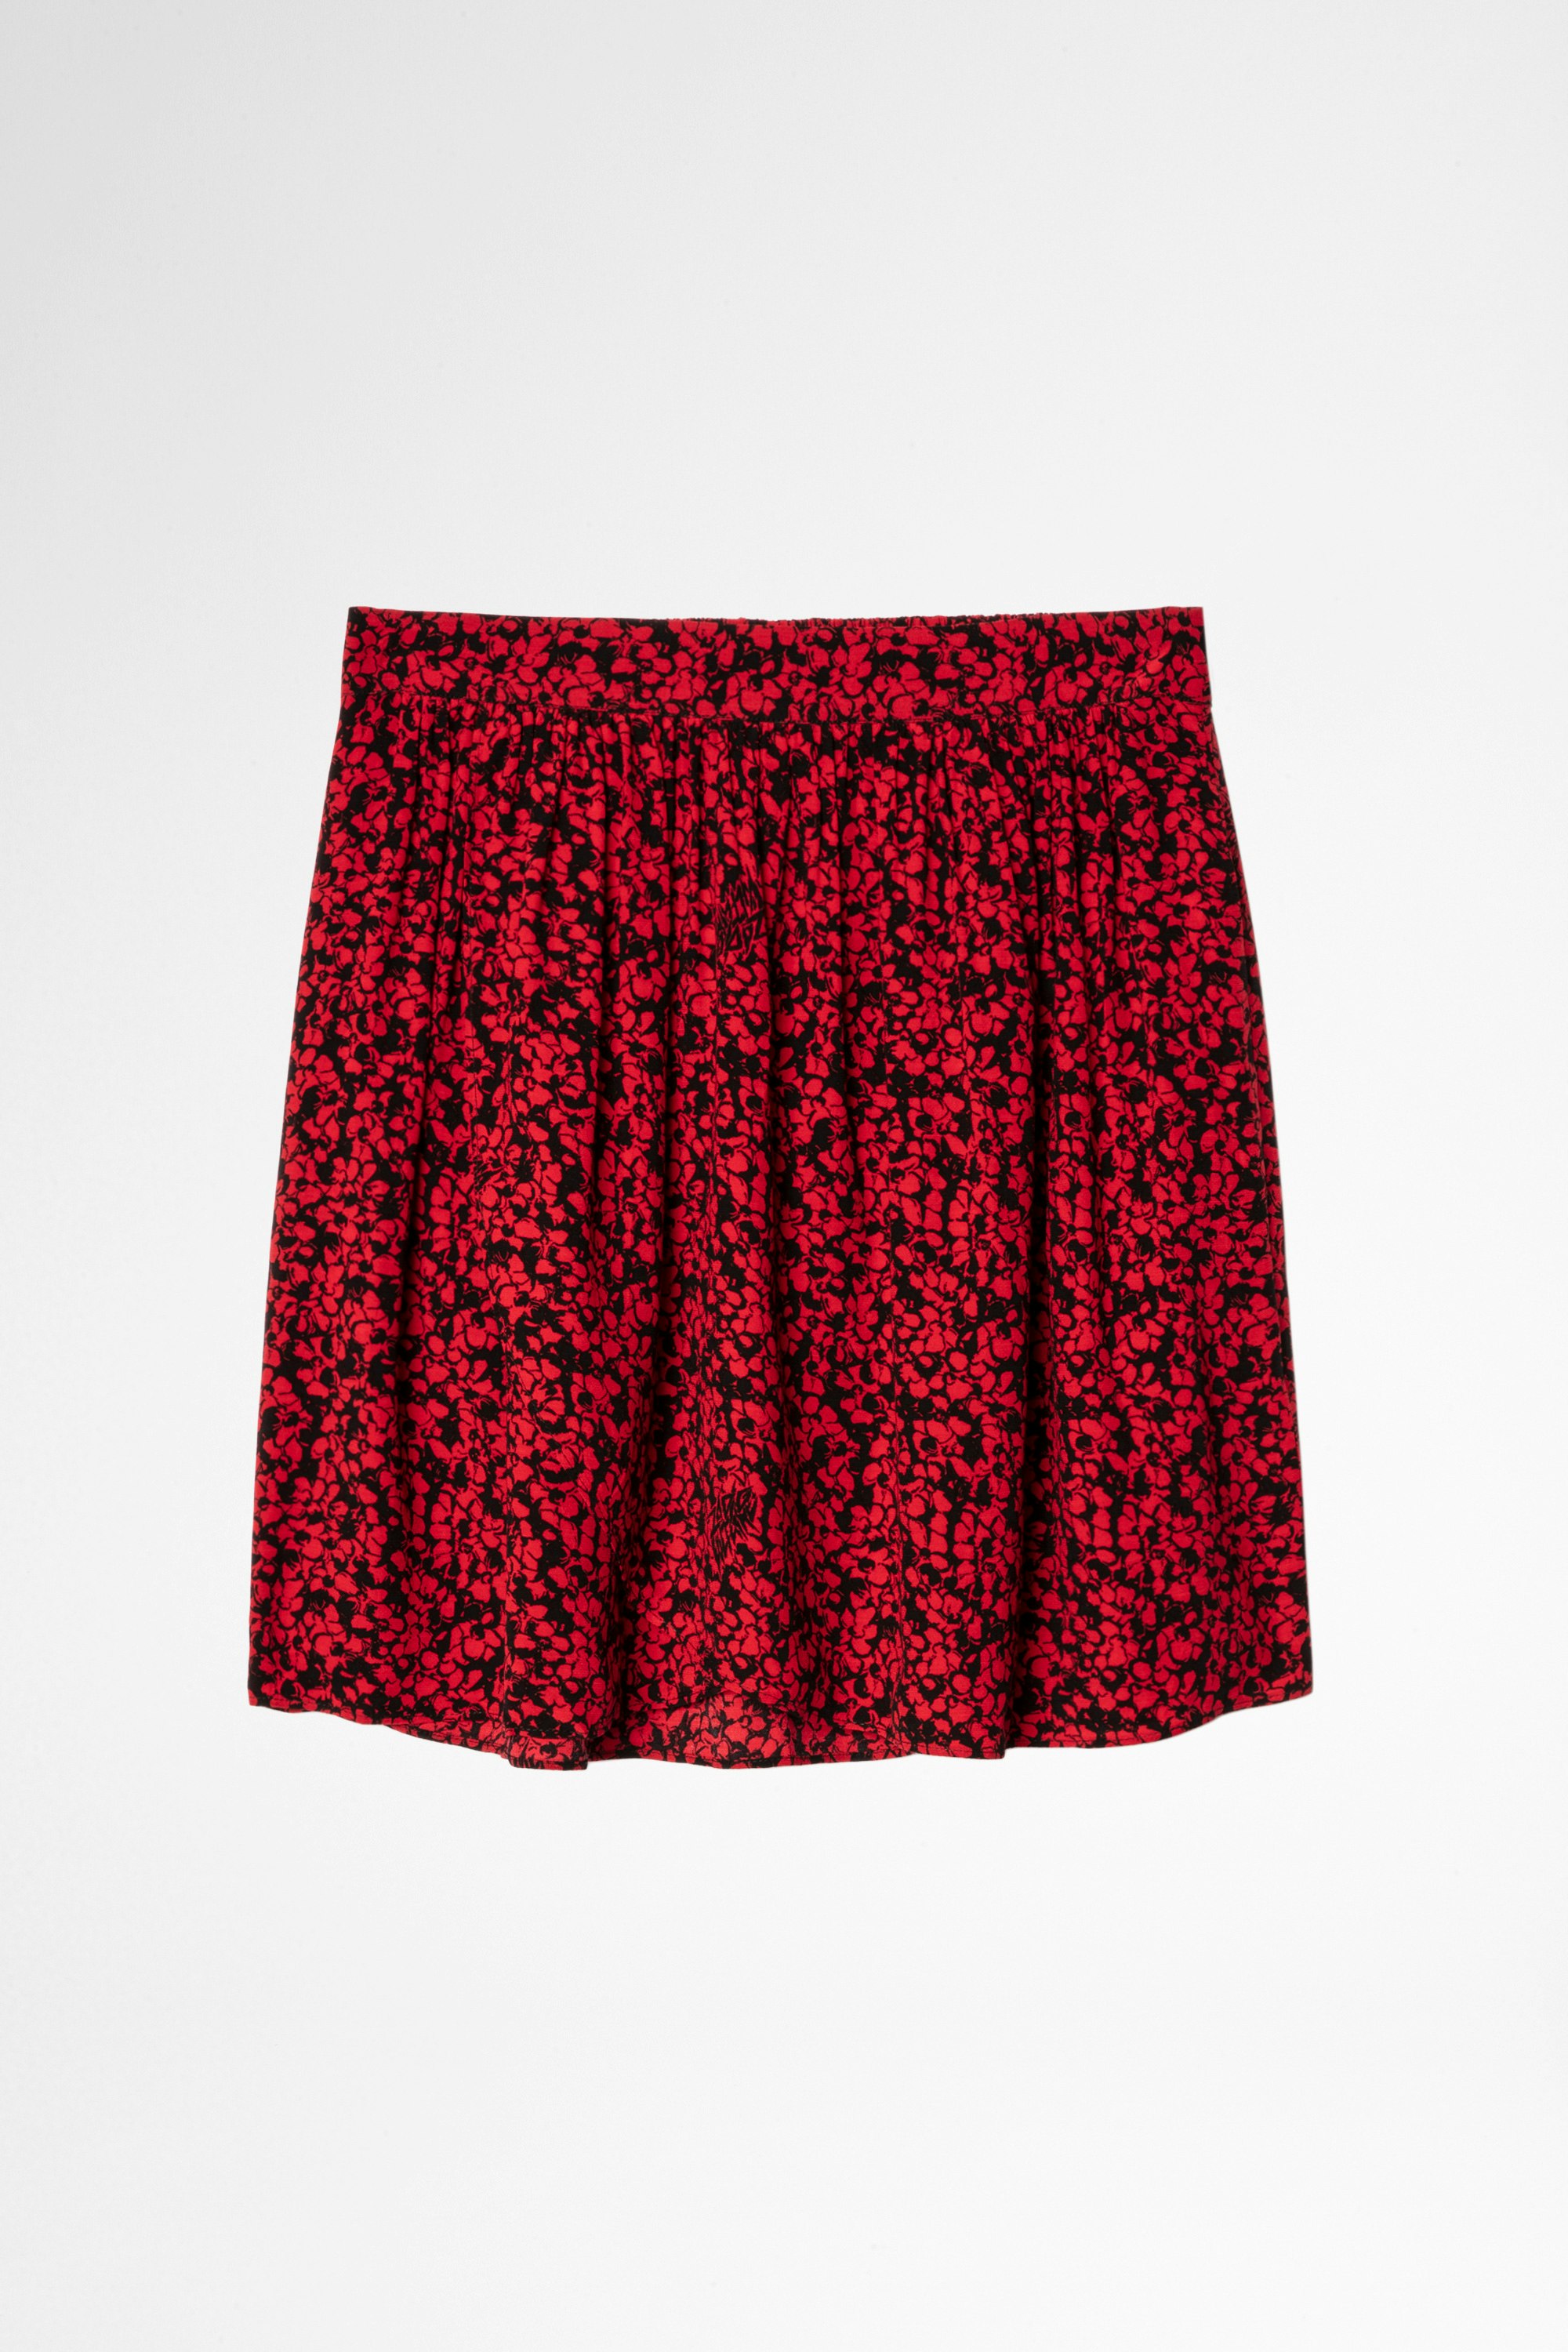 Jeveal Skirt Women’s red and black floral print short skirt